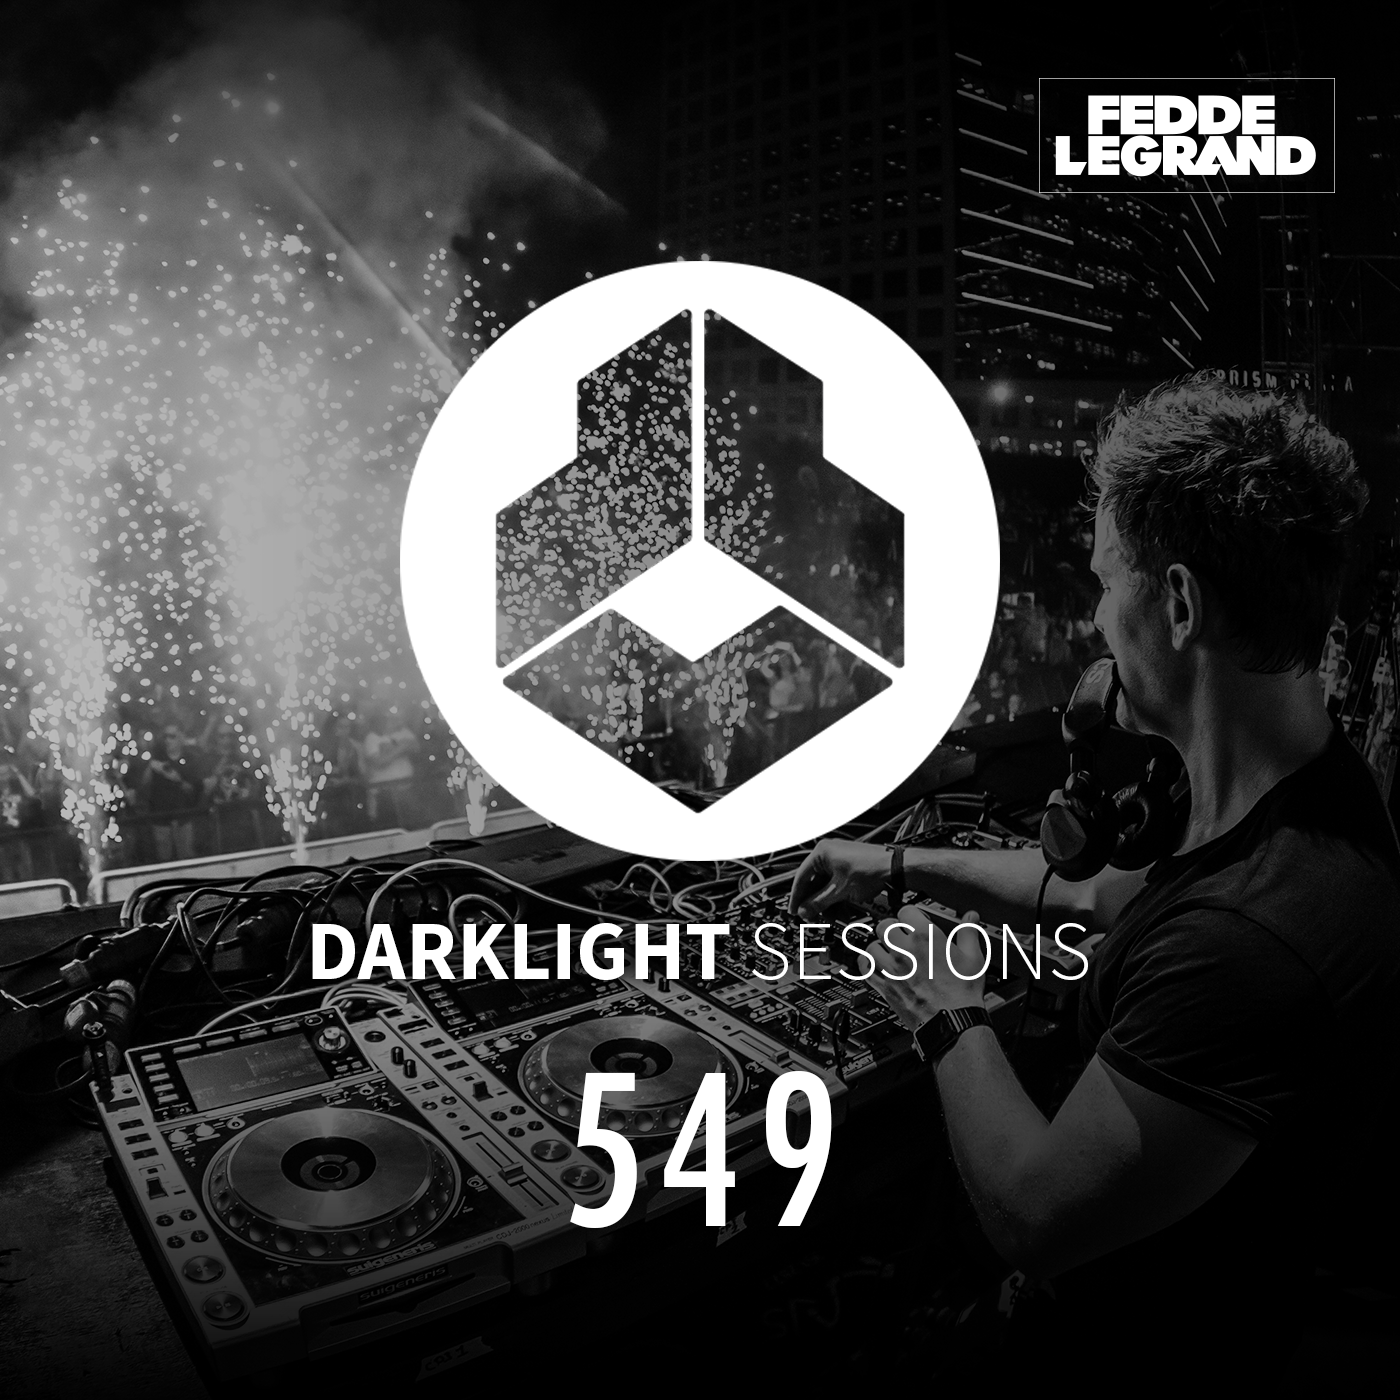 Darklight Sessions 549